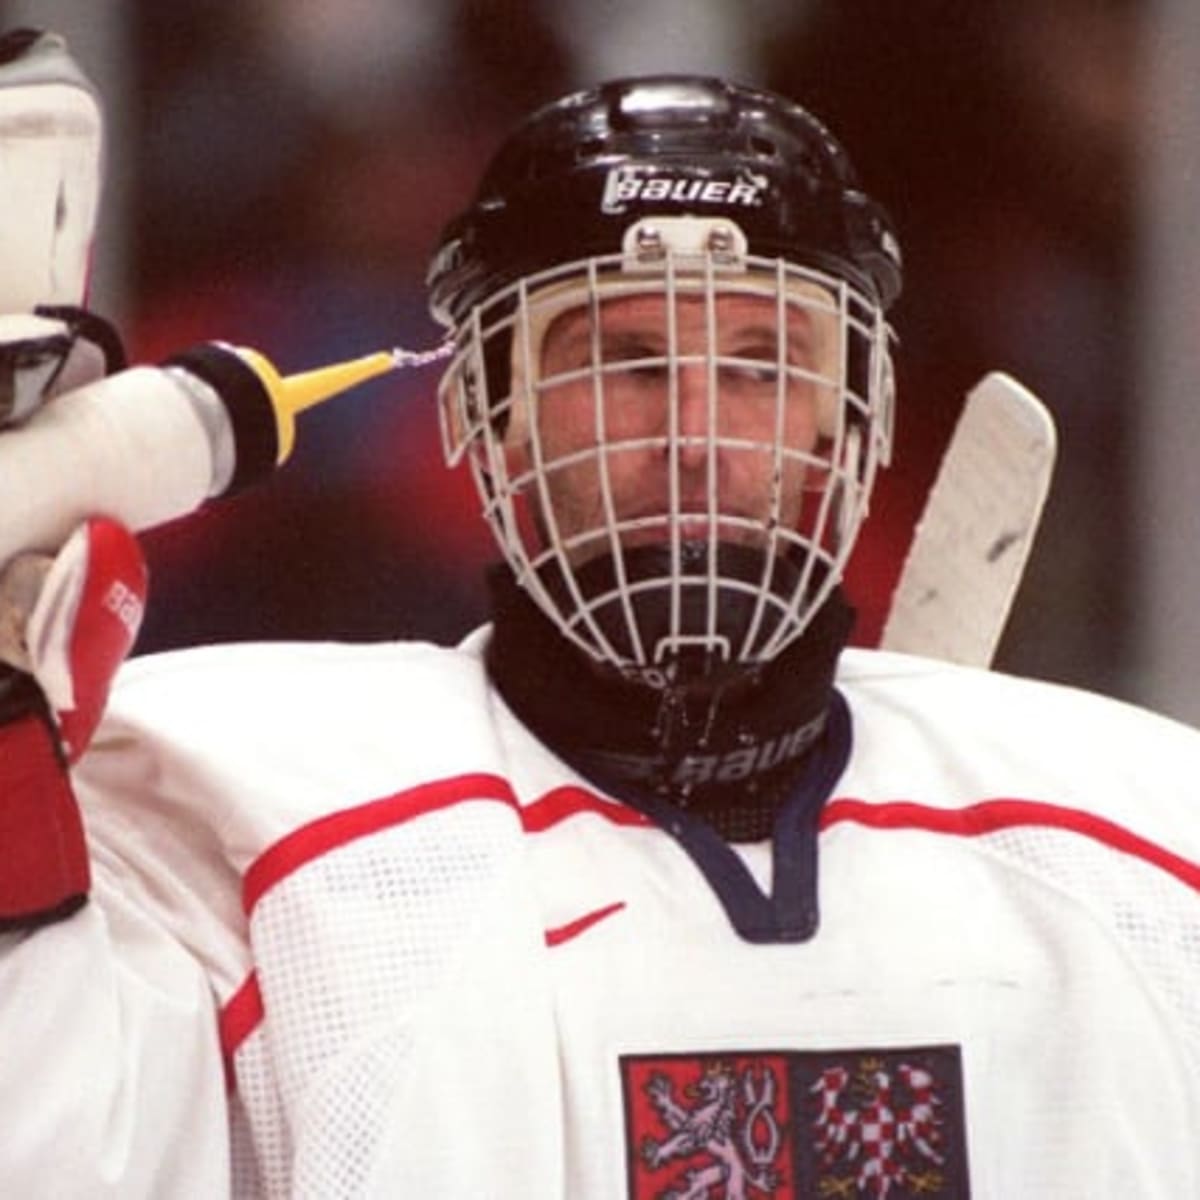 Hall of Famer Scott Niedermayer likes this year's Ducks - The Hockey News